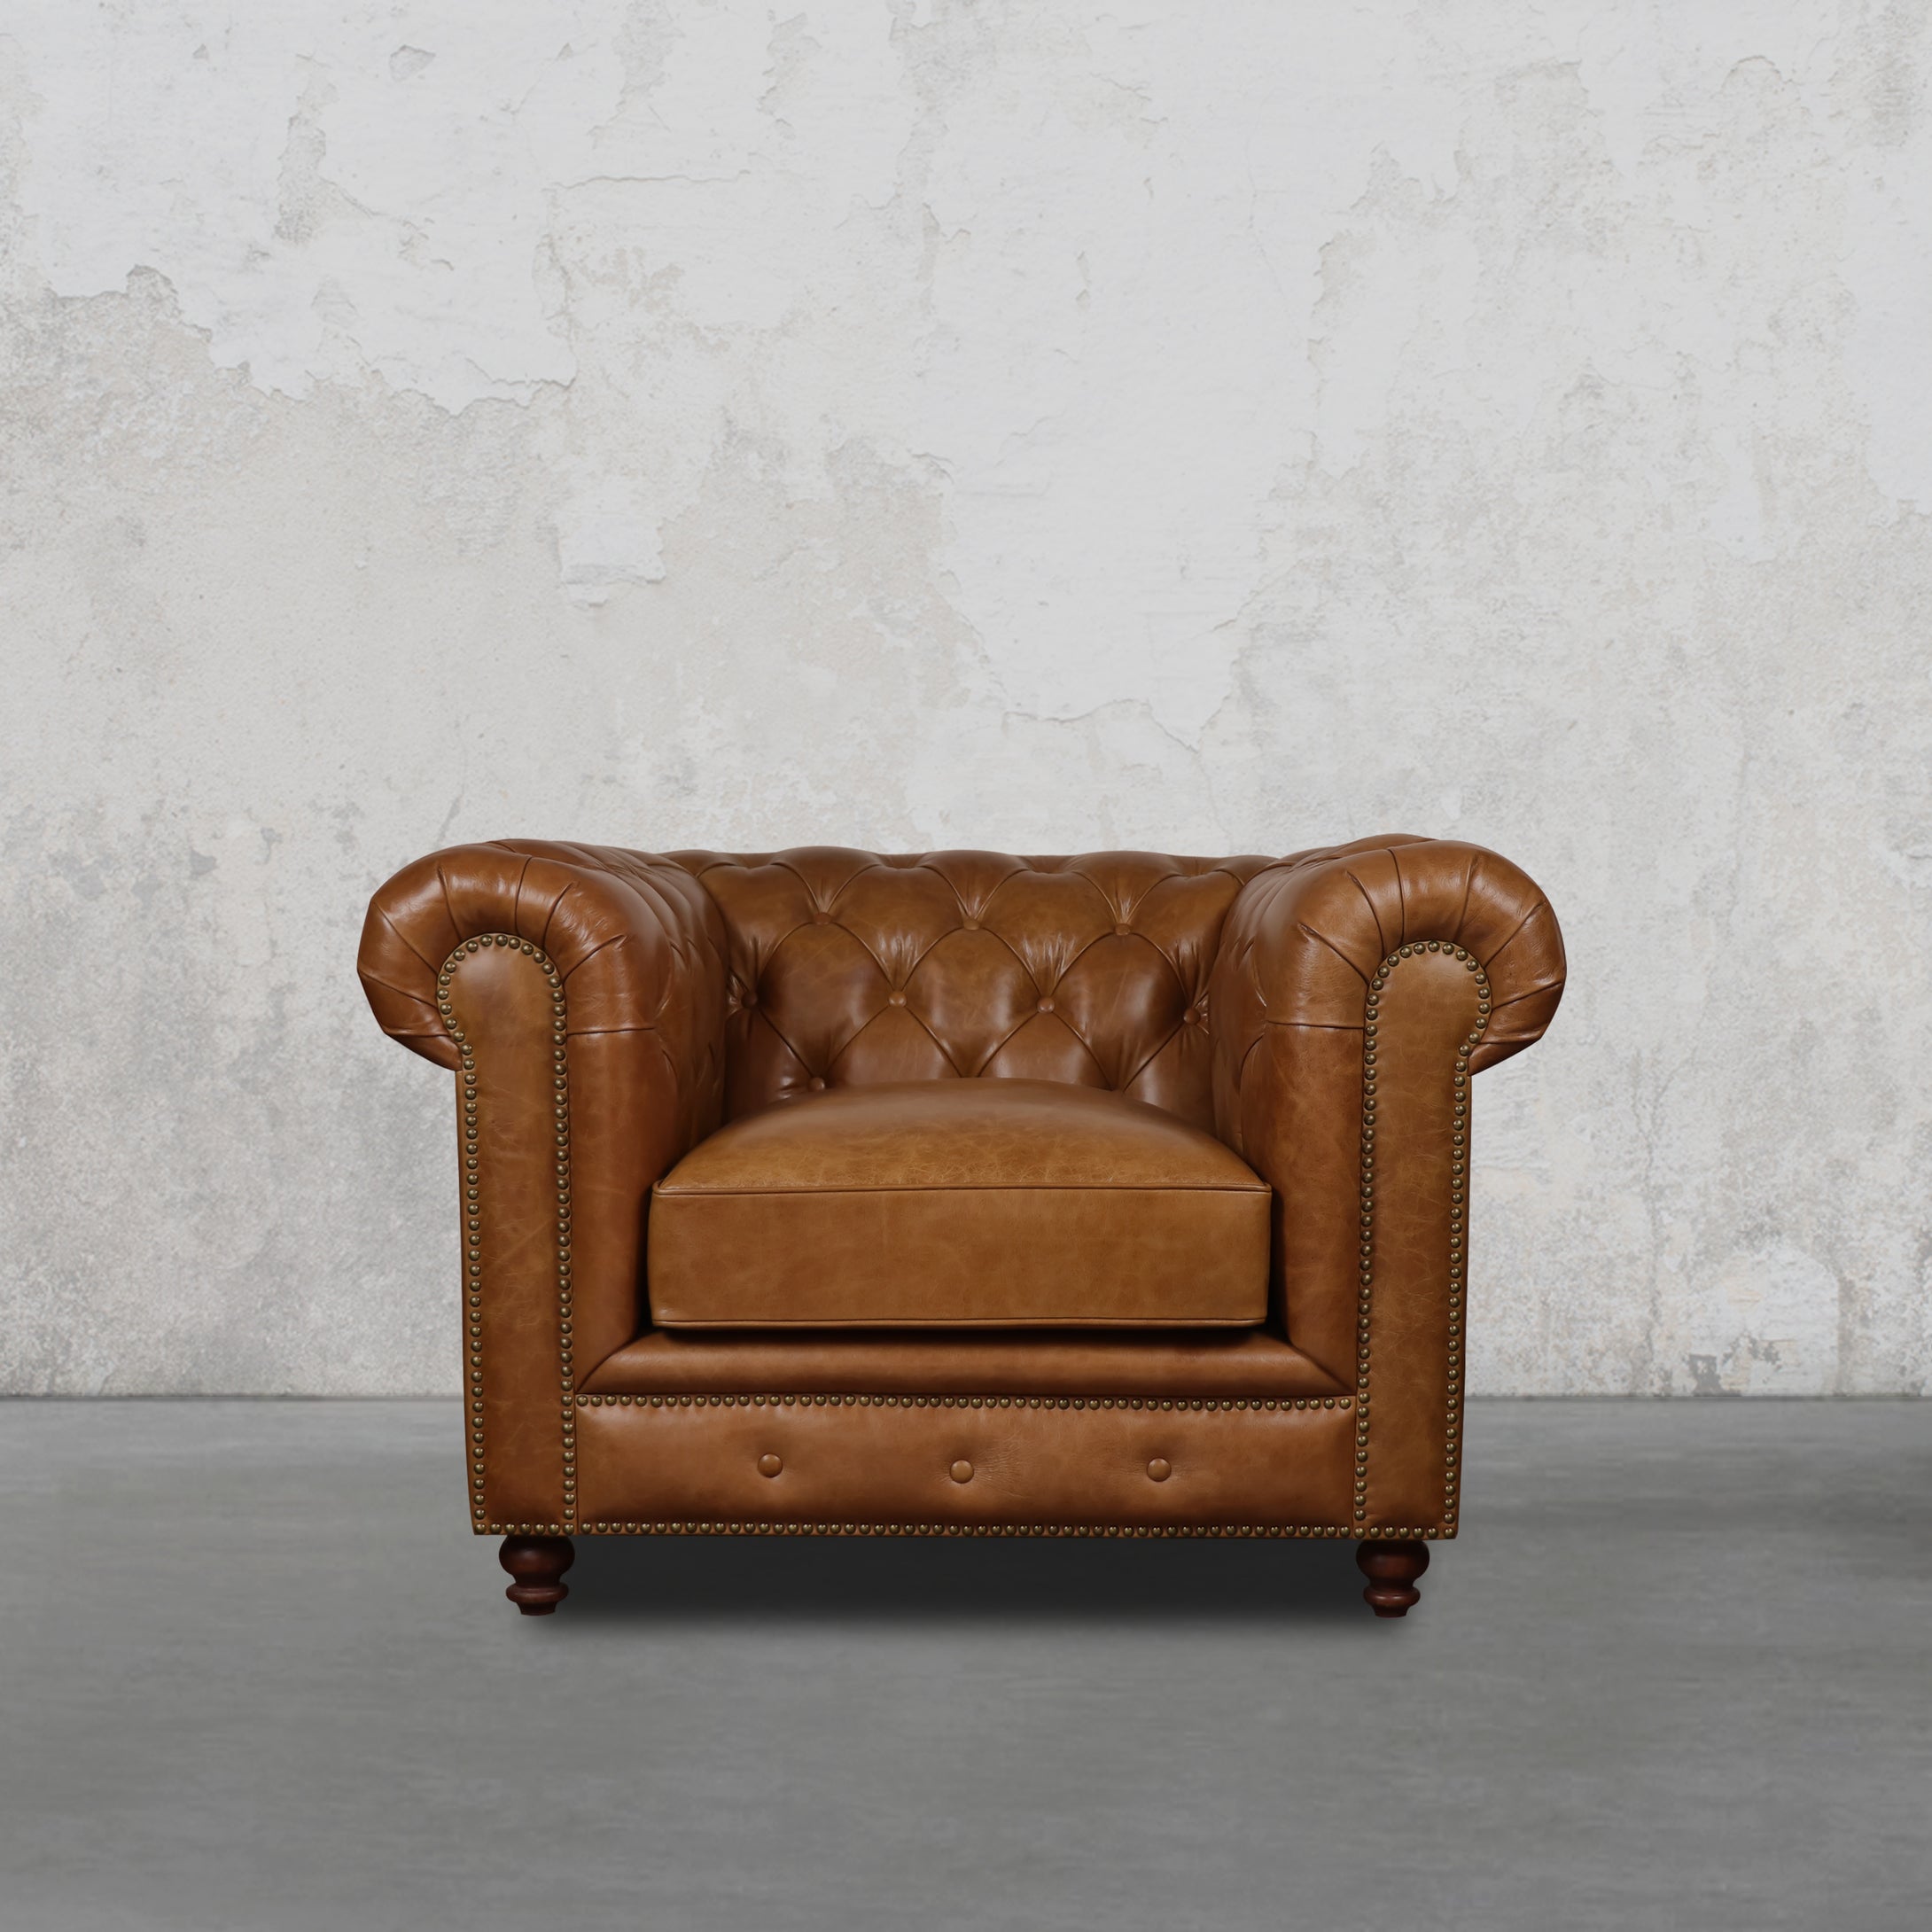 Gentleman's Club Single Seater Chesterfield Sofa